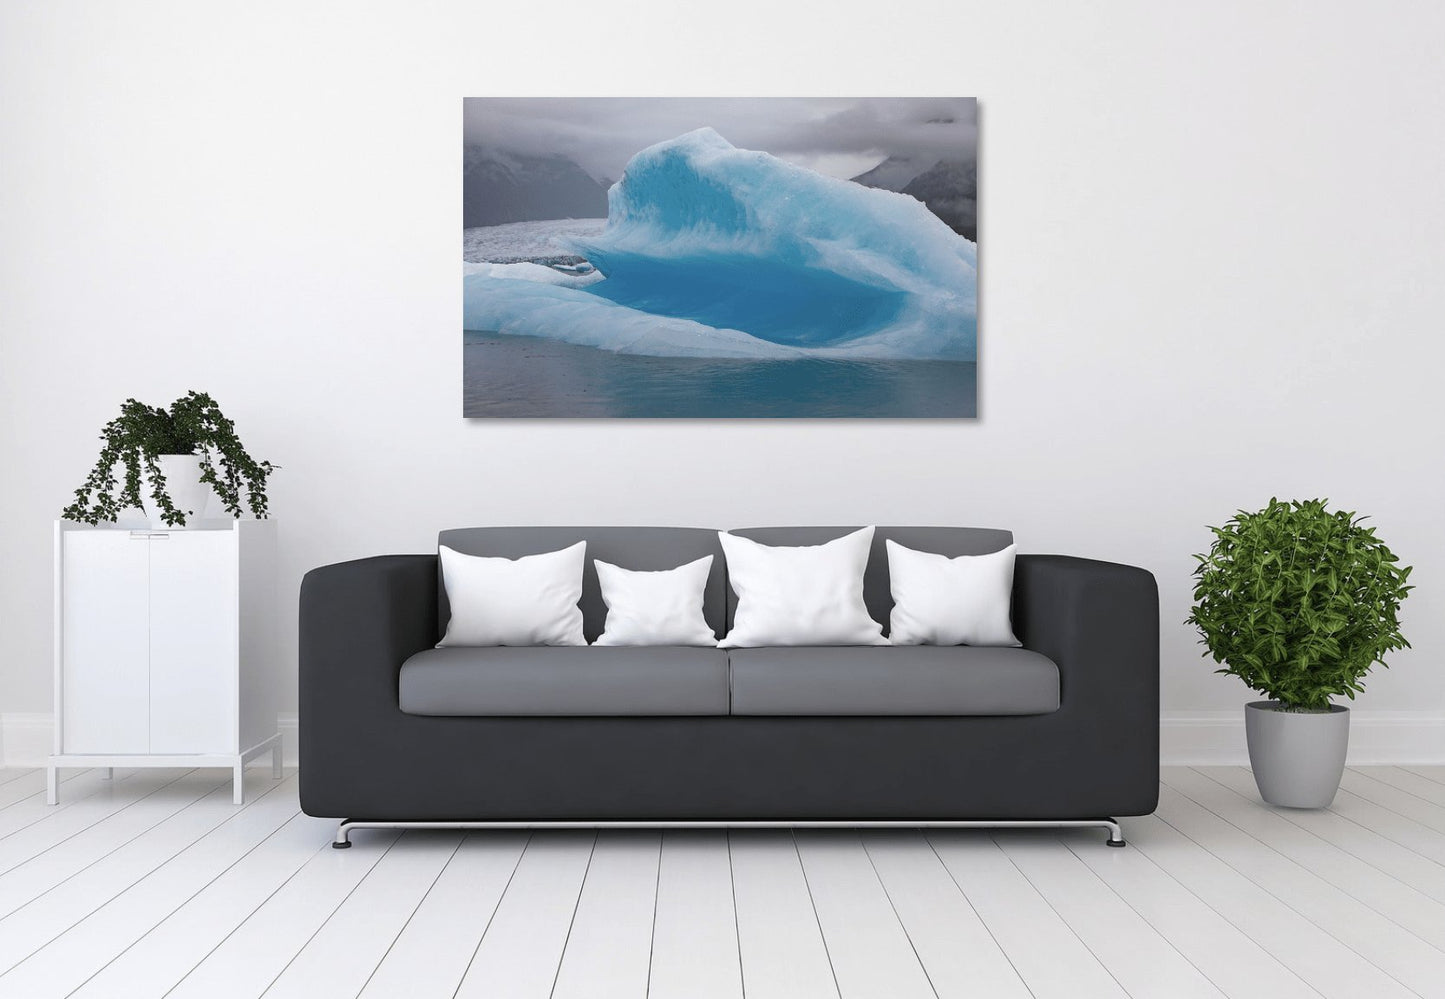 Large wall art for living room  of Blue glacier iceberg shaped like a wave 